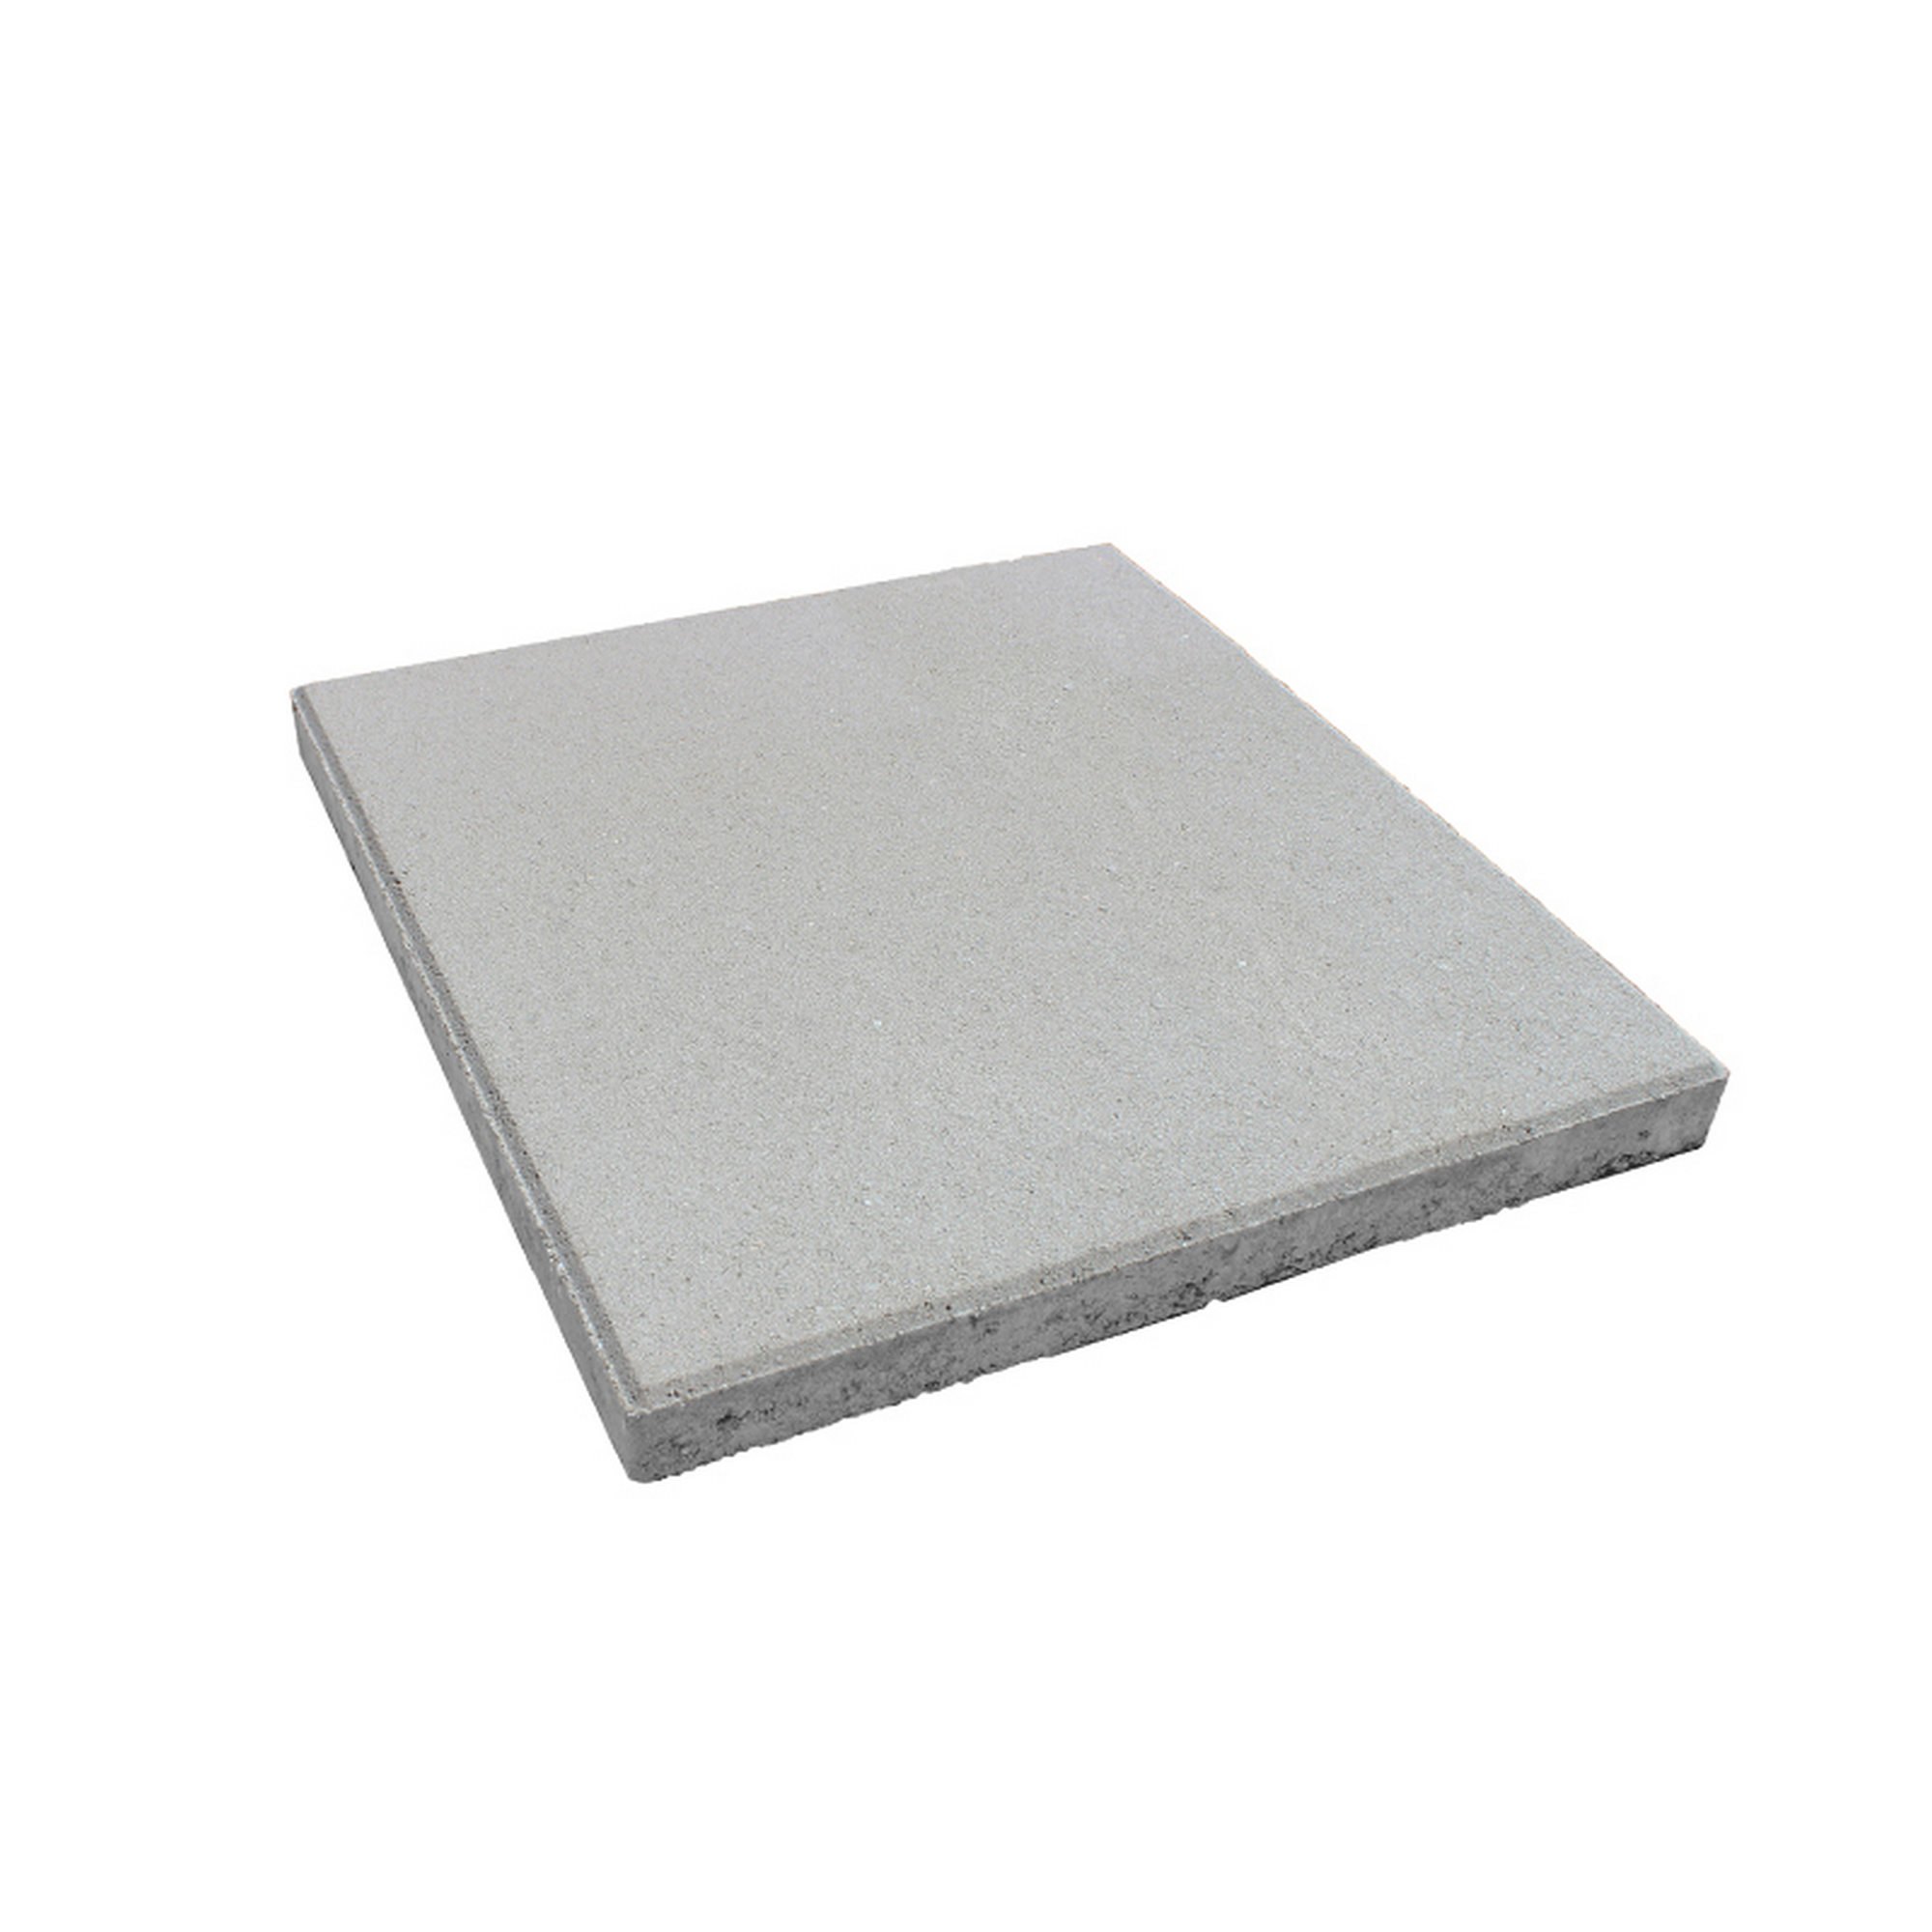 Diephaus Betonplatte grau 40 x 40 x 4 cm